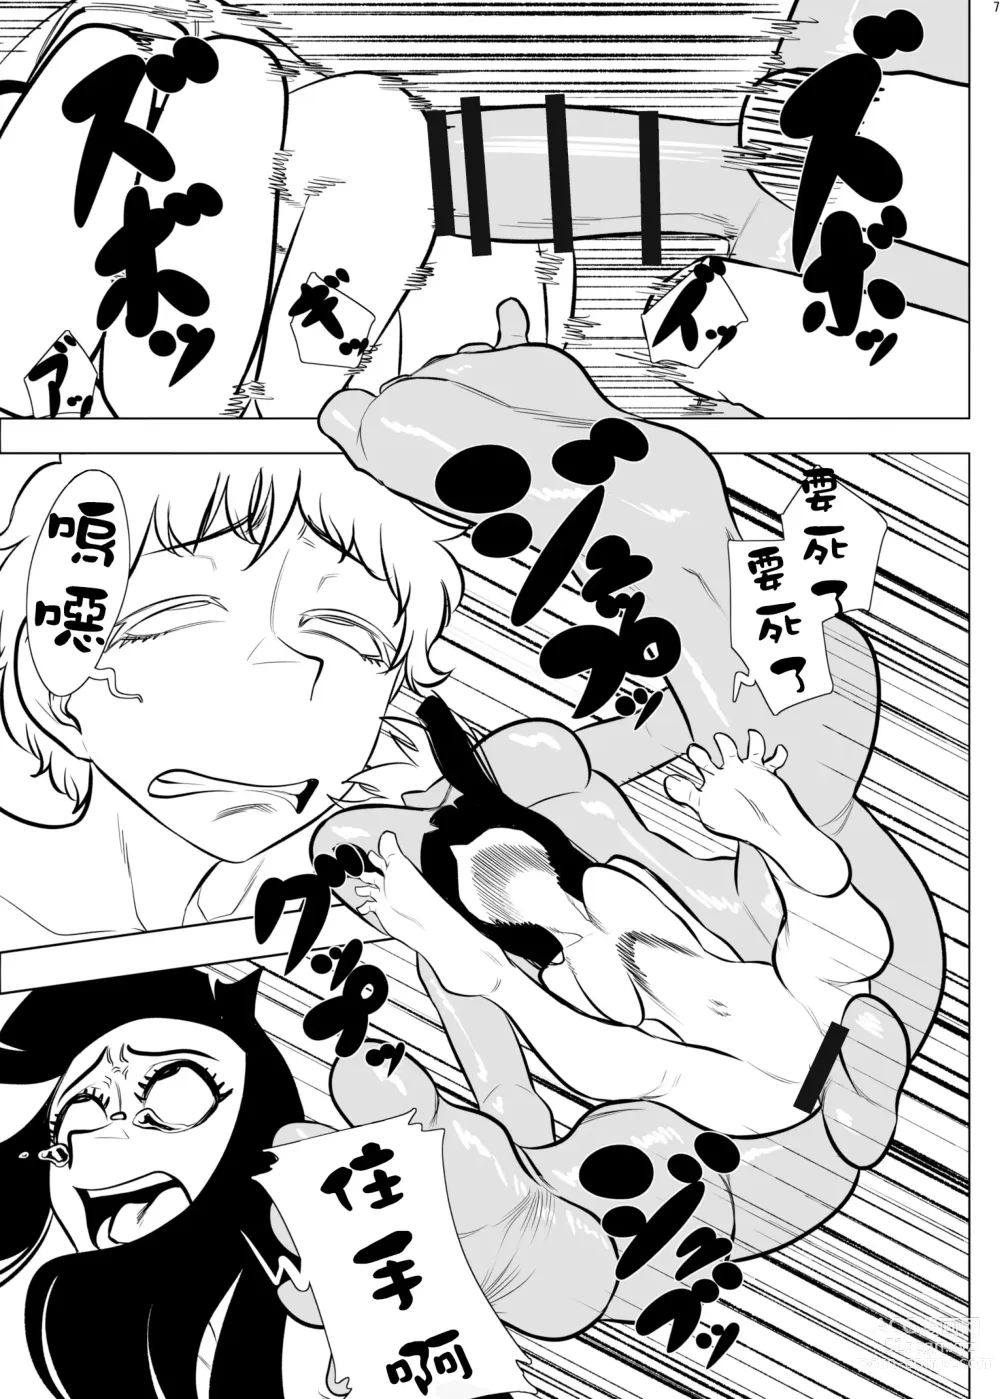 Page 7 of doujinshi Chikyuujin Youshoku Keikaku